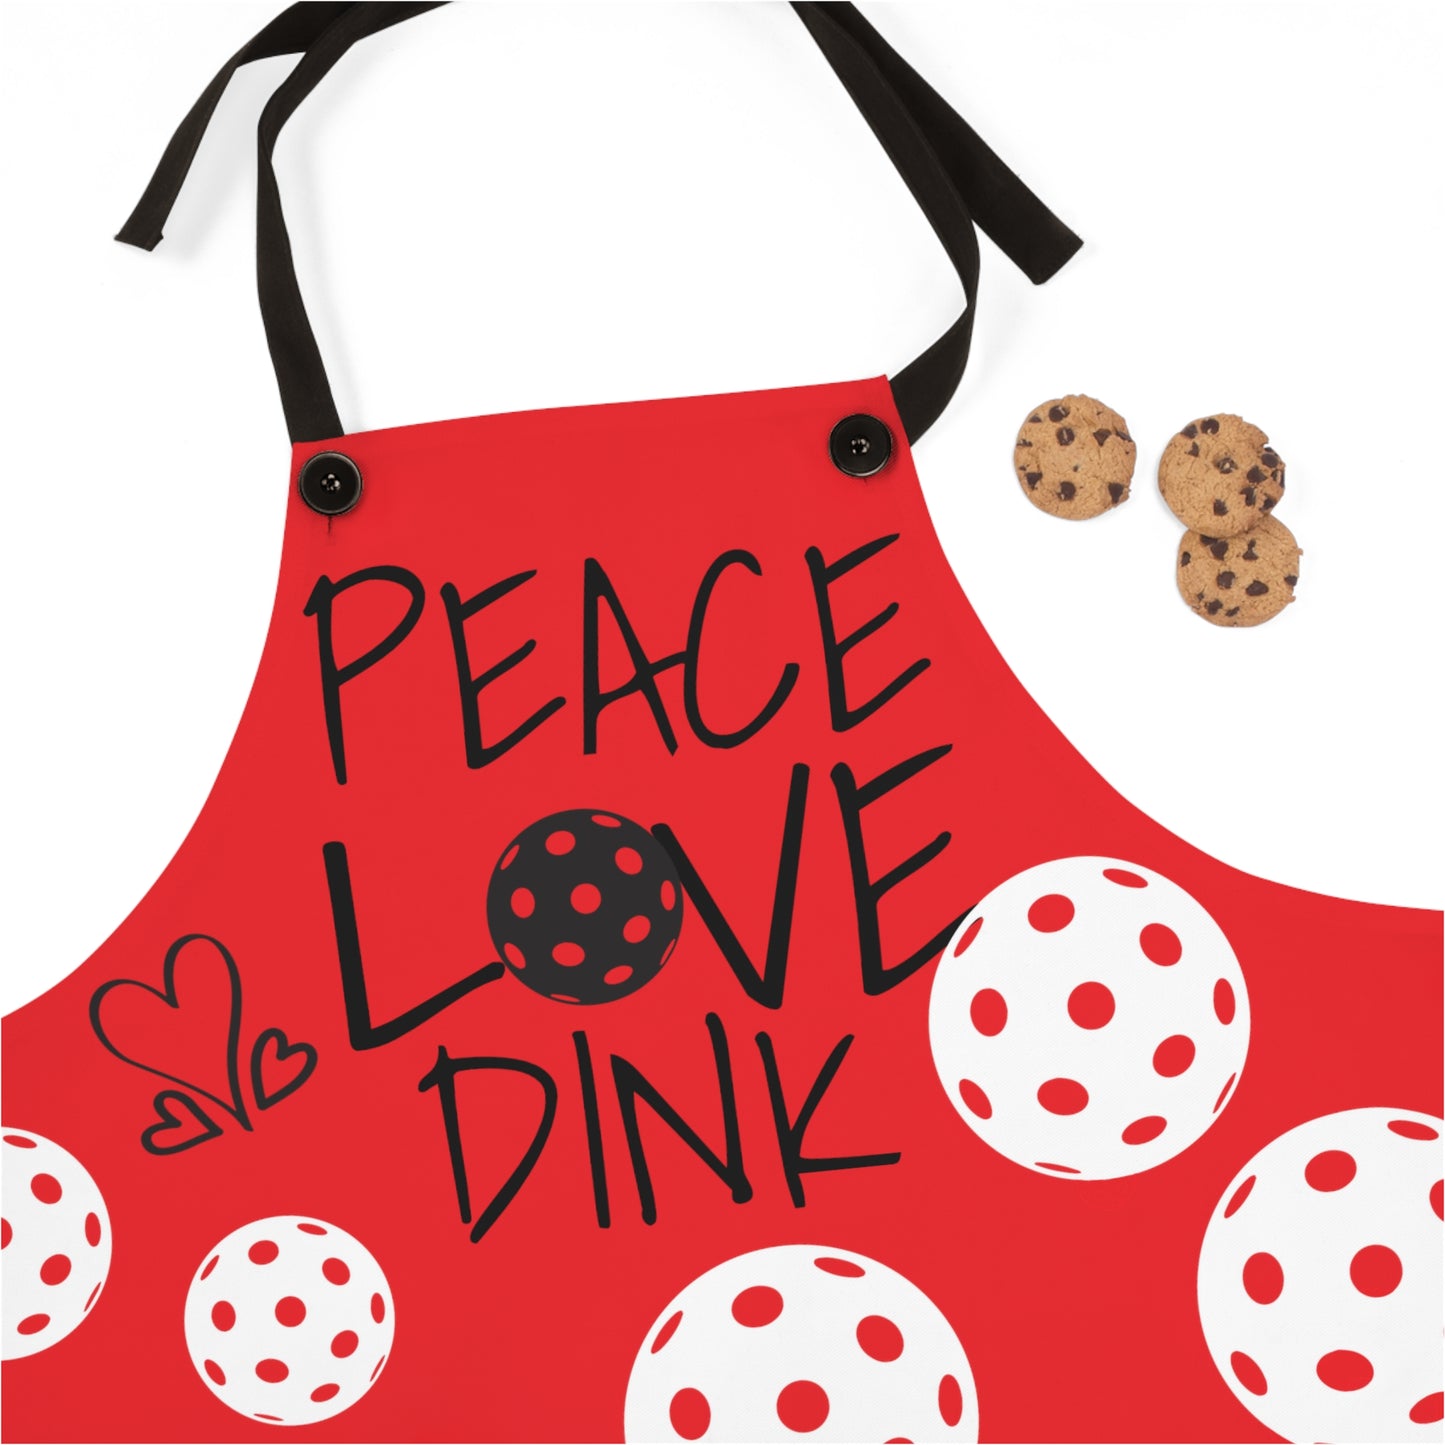 PICKLEBALL - PEACE LOVE DINK Apron (AOP) Red